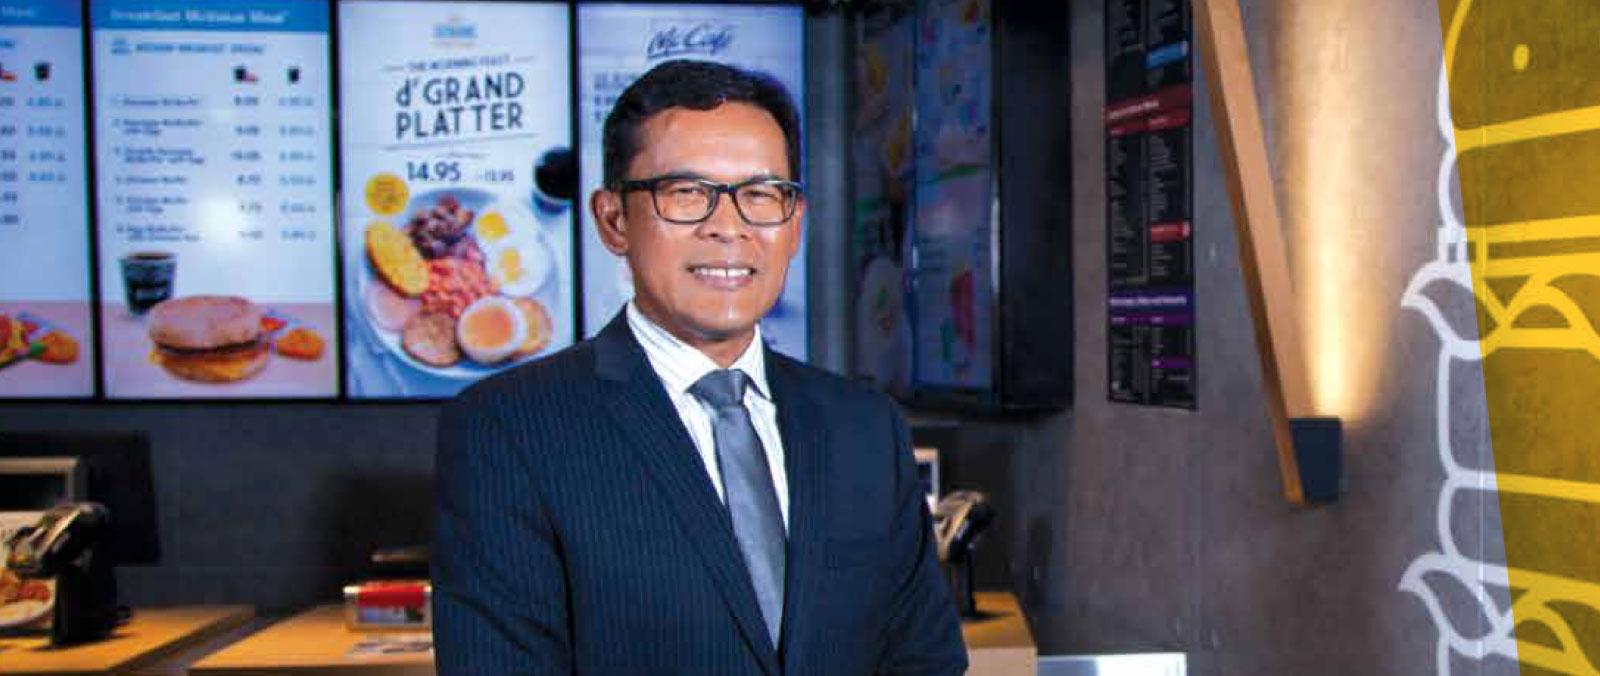 Golden opportunities: Azmir Jaafar, Managing Director of McDonald’s Malaysia's image'